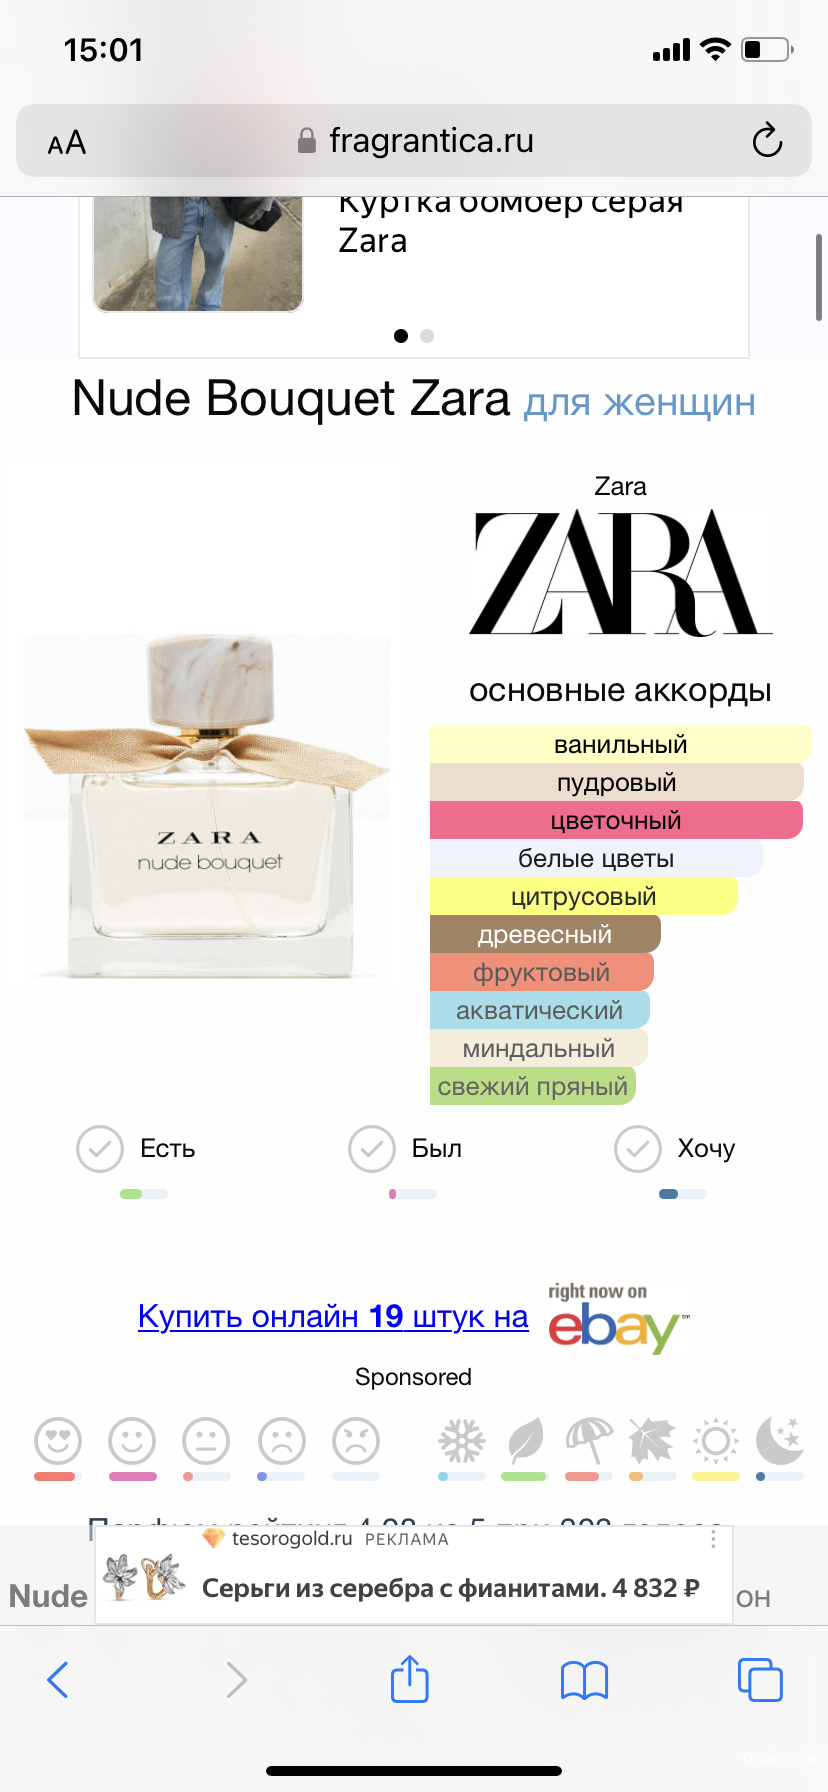 Nude Bouquet, Zara, 100 ml